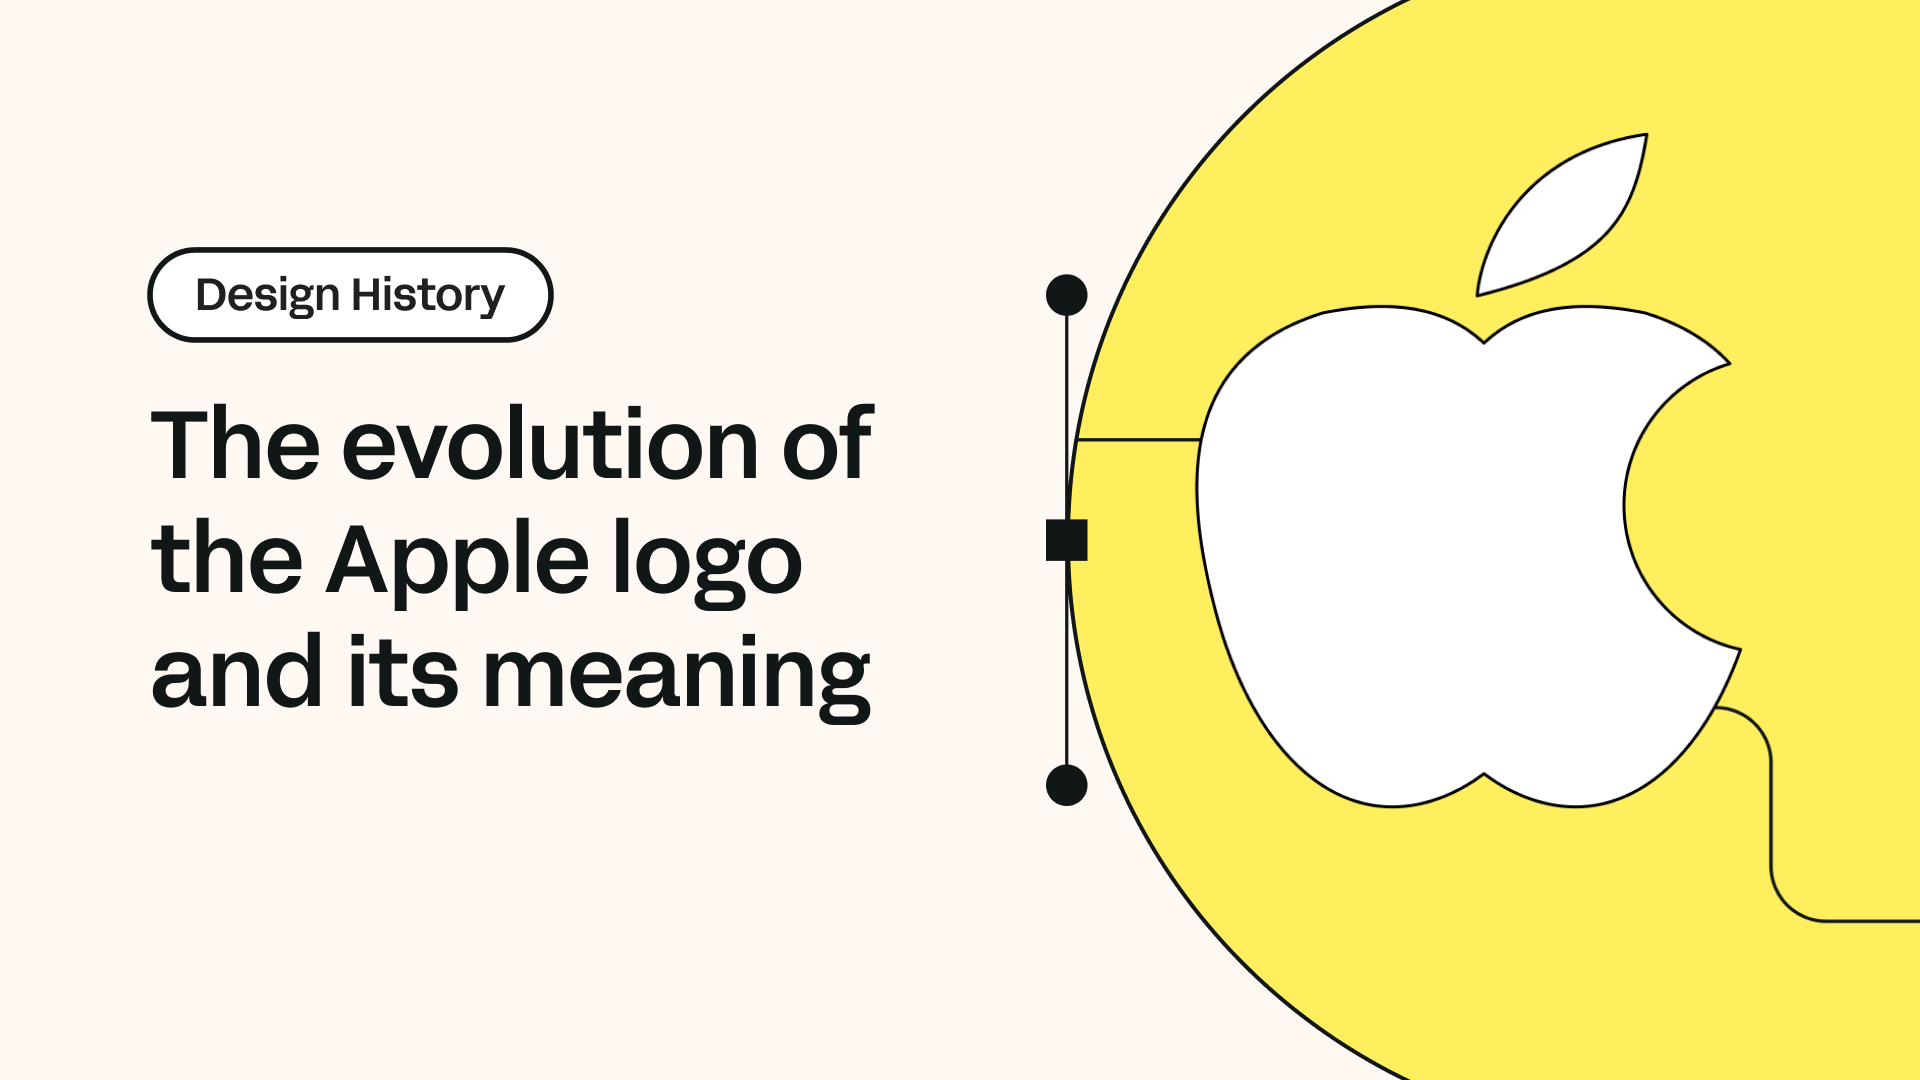 Netflix Logo Design – History, Meaning and Evolution